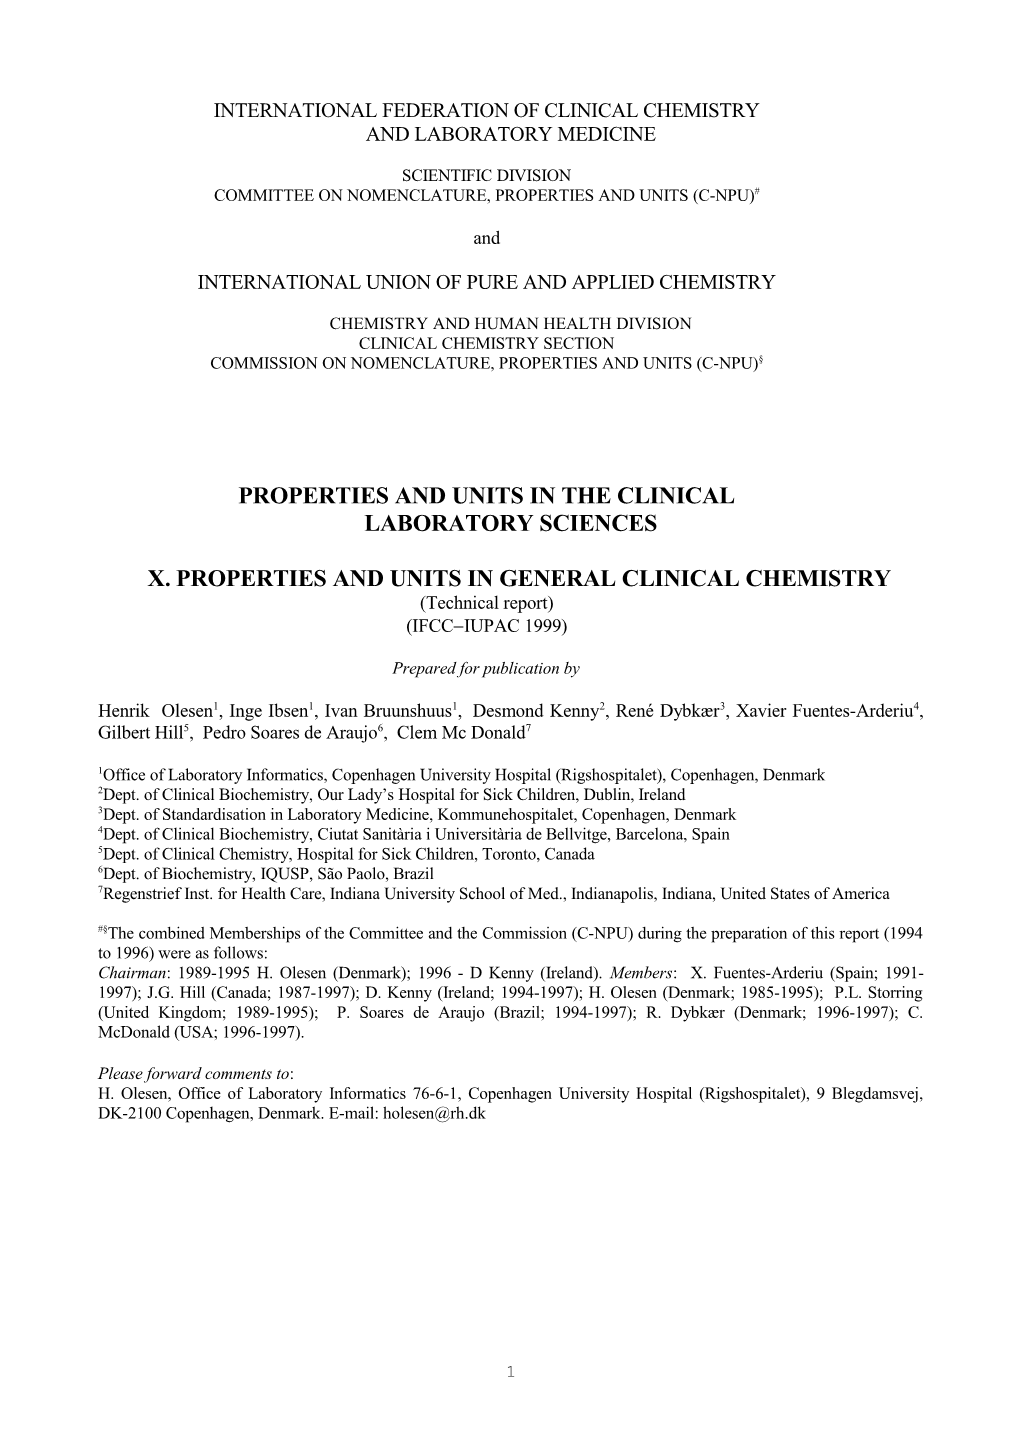 International Federation of Clinical Chemistry